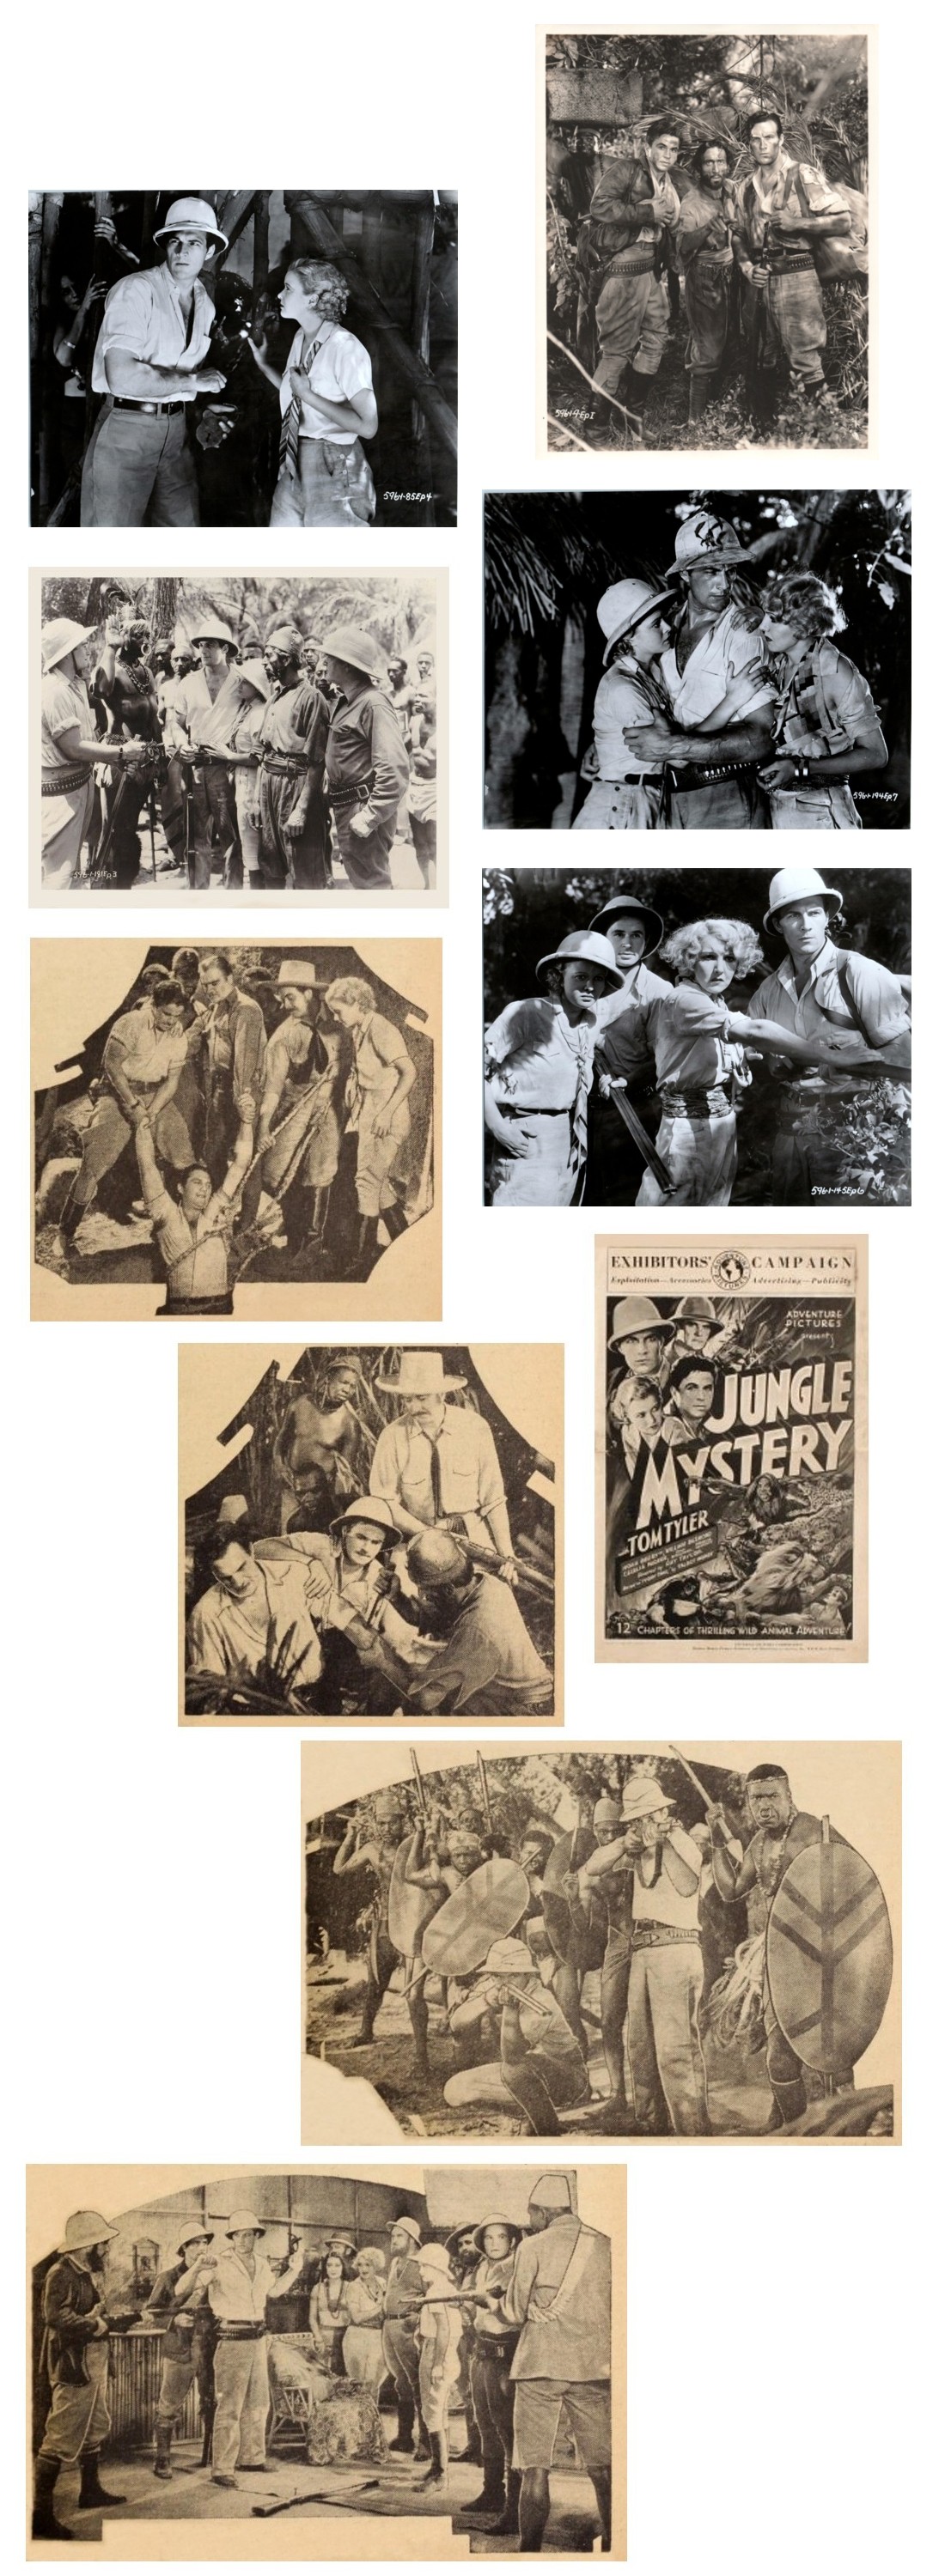 Jungle Mystery Boys Cinema stills pressbook